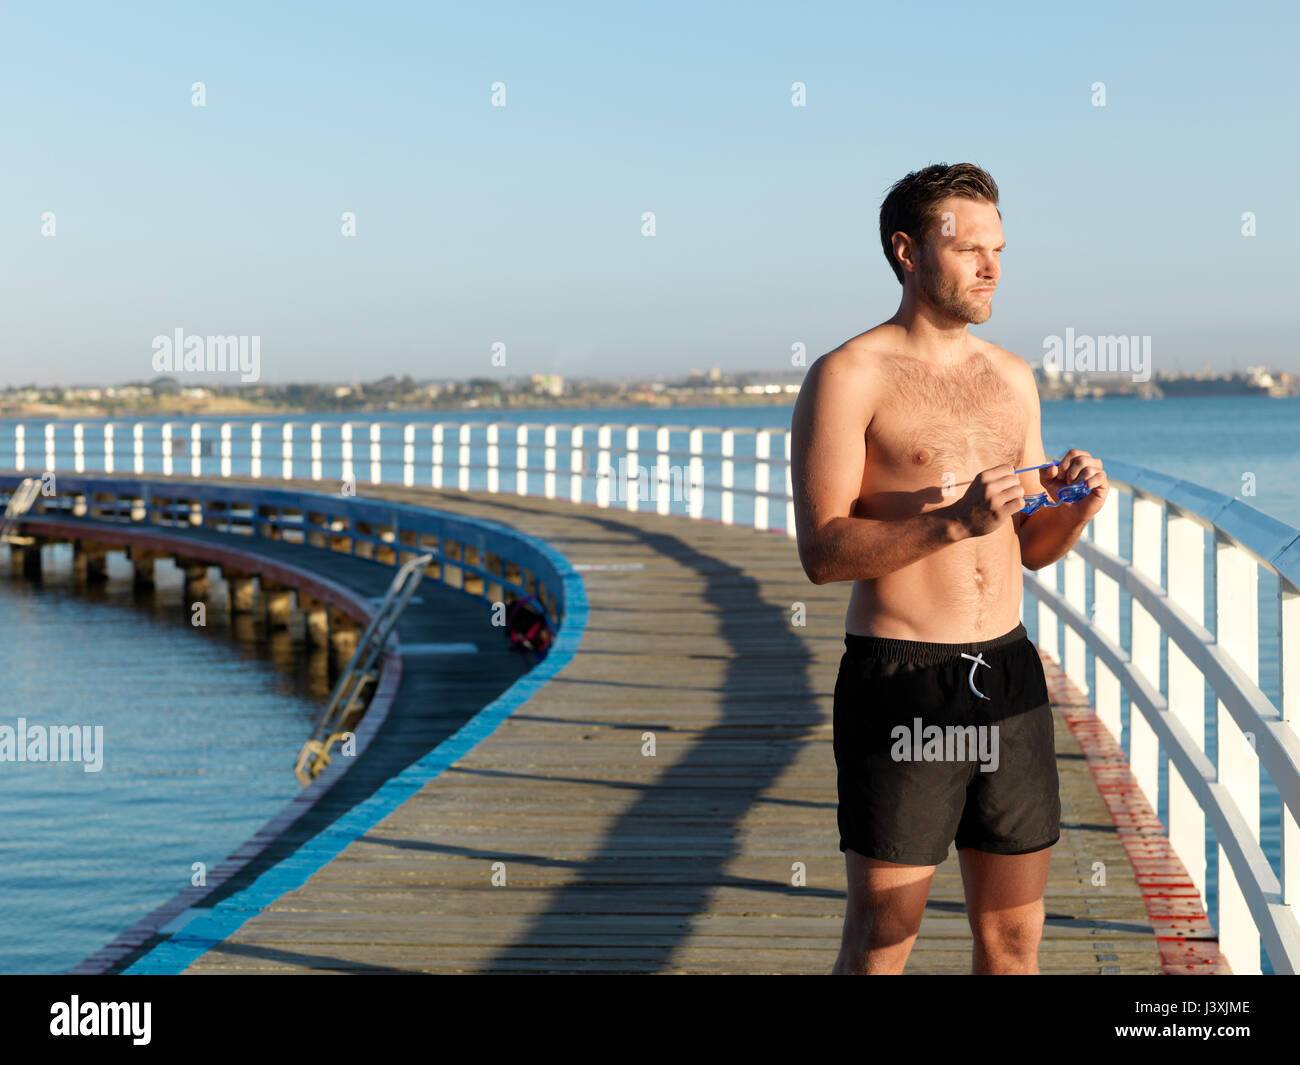 Swimmer holding swimming goggles on boardwalk, Eastern Beach, Geelong, Victoria, Australia Stock Photo